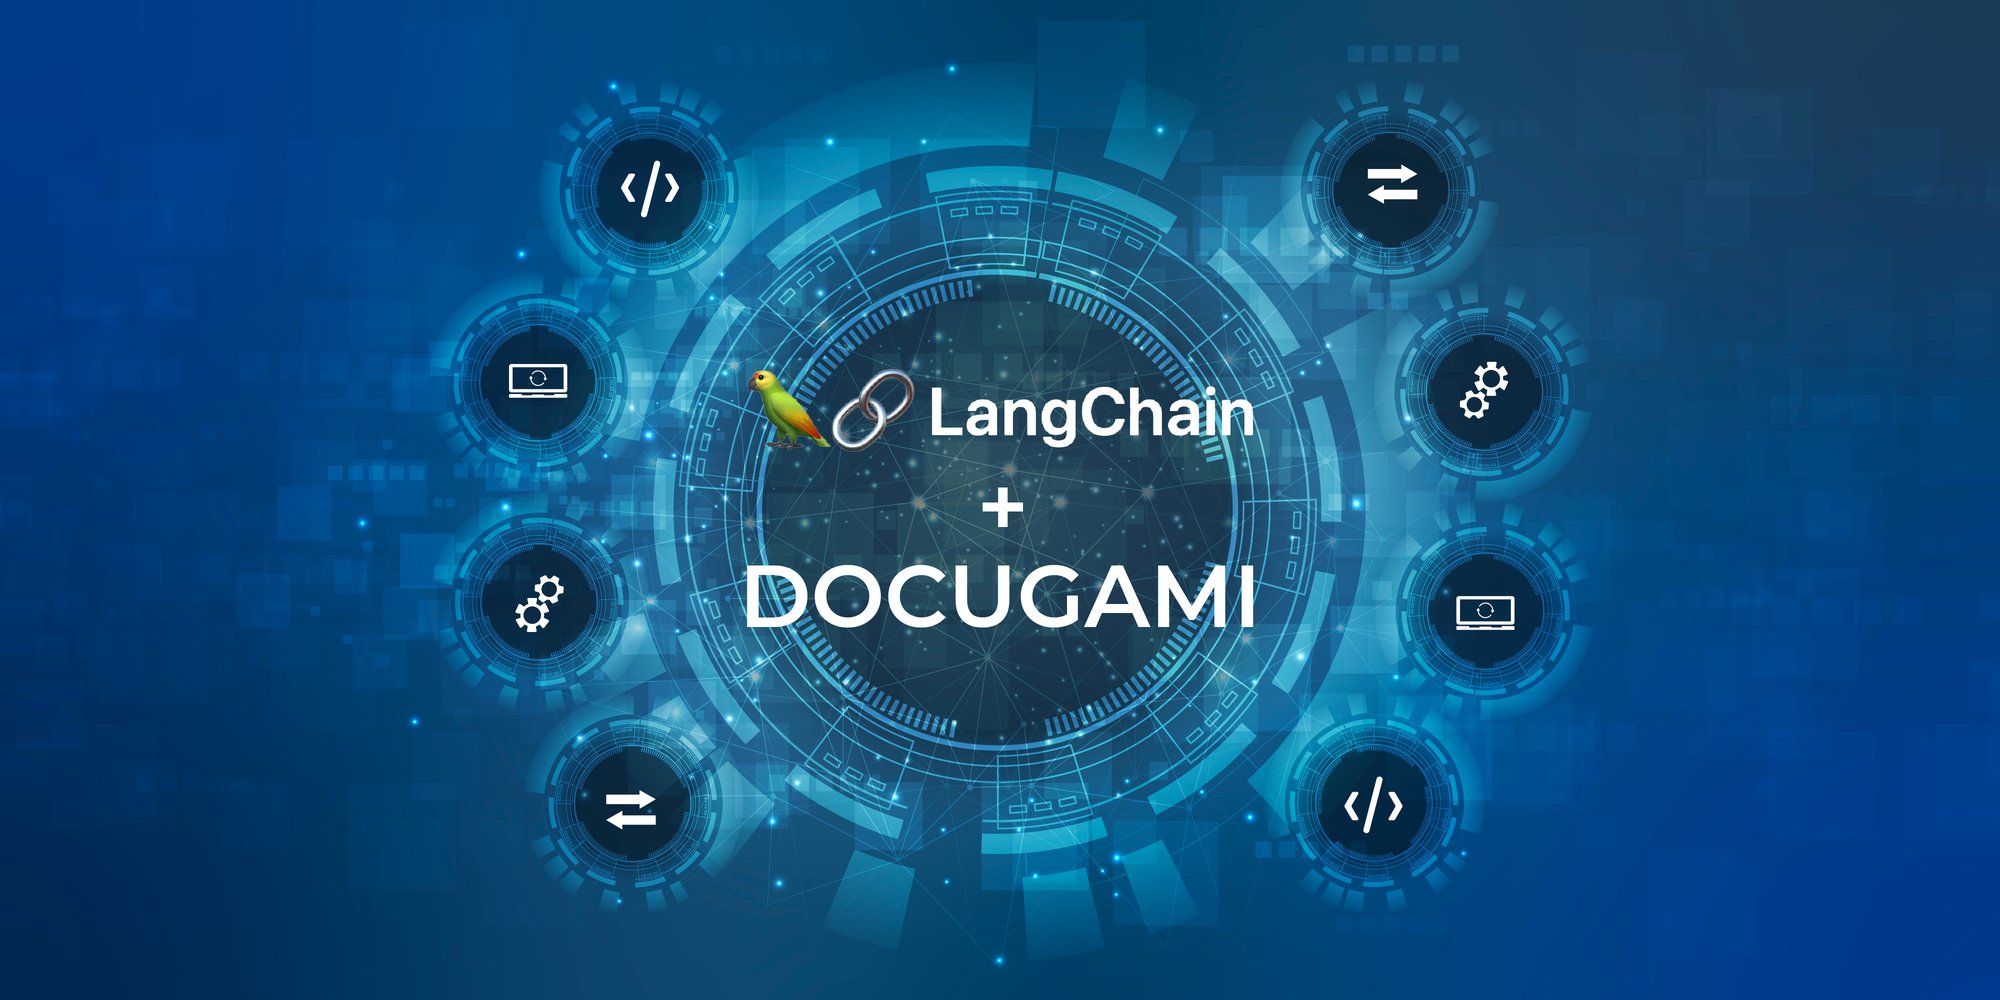 LangChain and Docugami